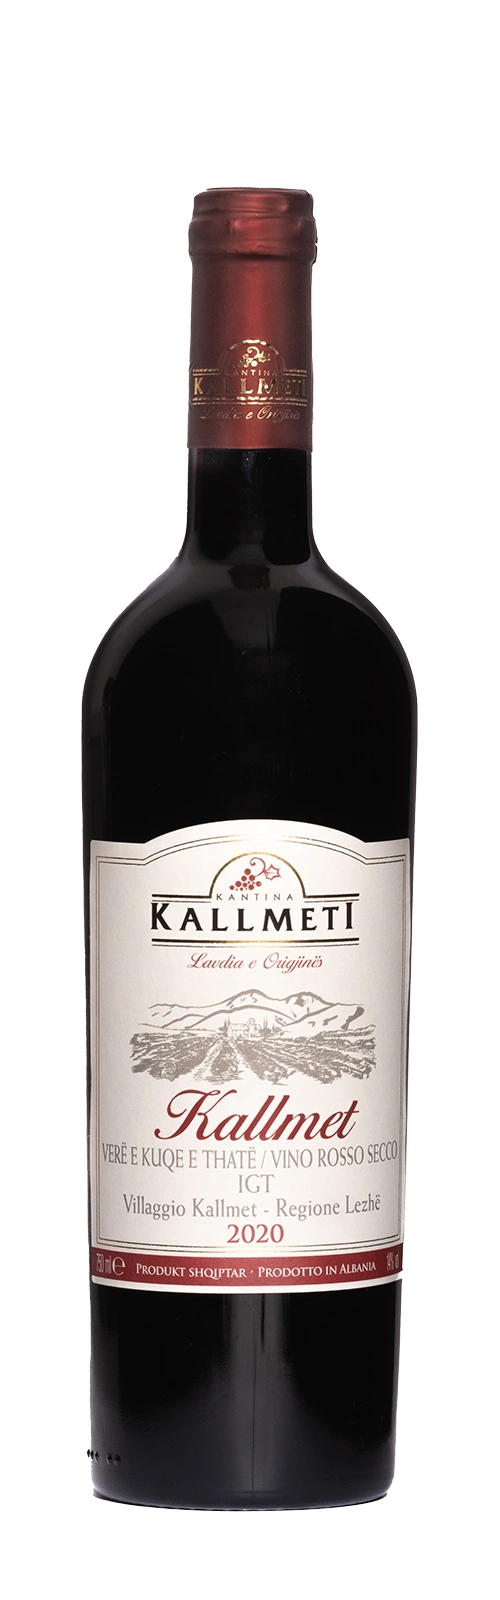 Kallmeti Classic Red Wine 2020